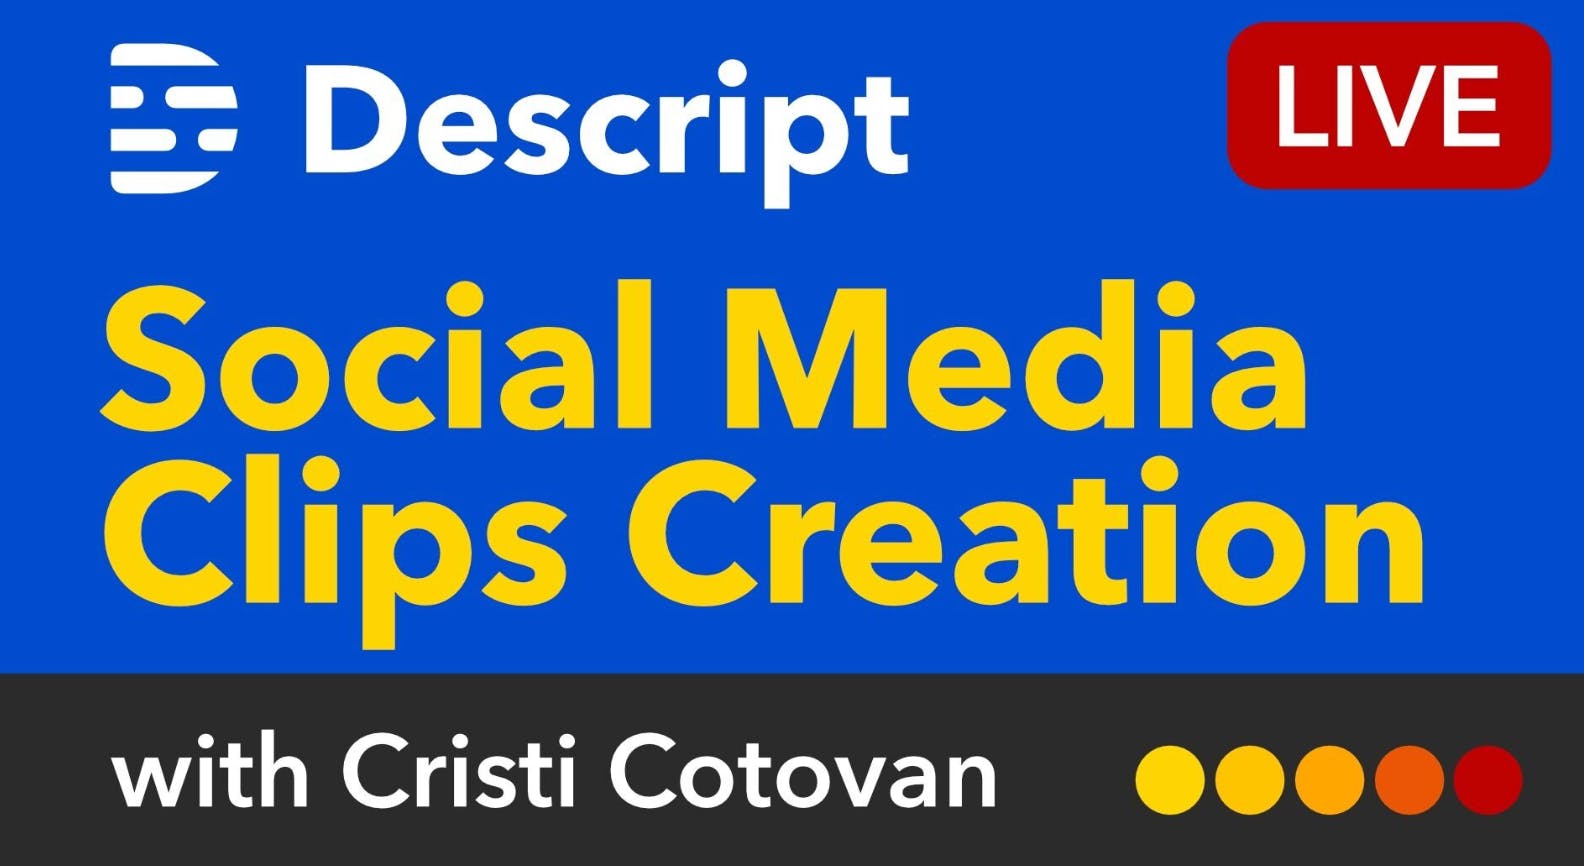 Social Media Clips Creation in Descript Storyboard